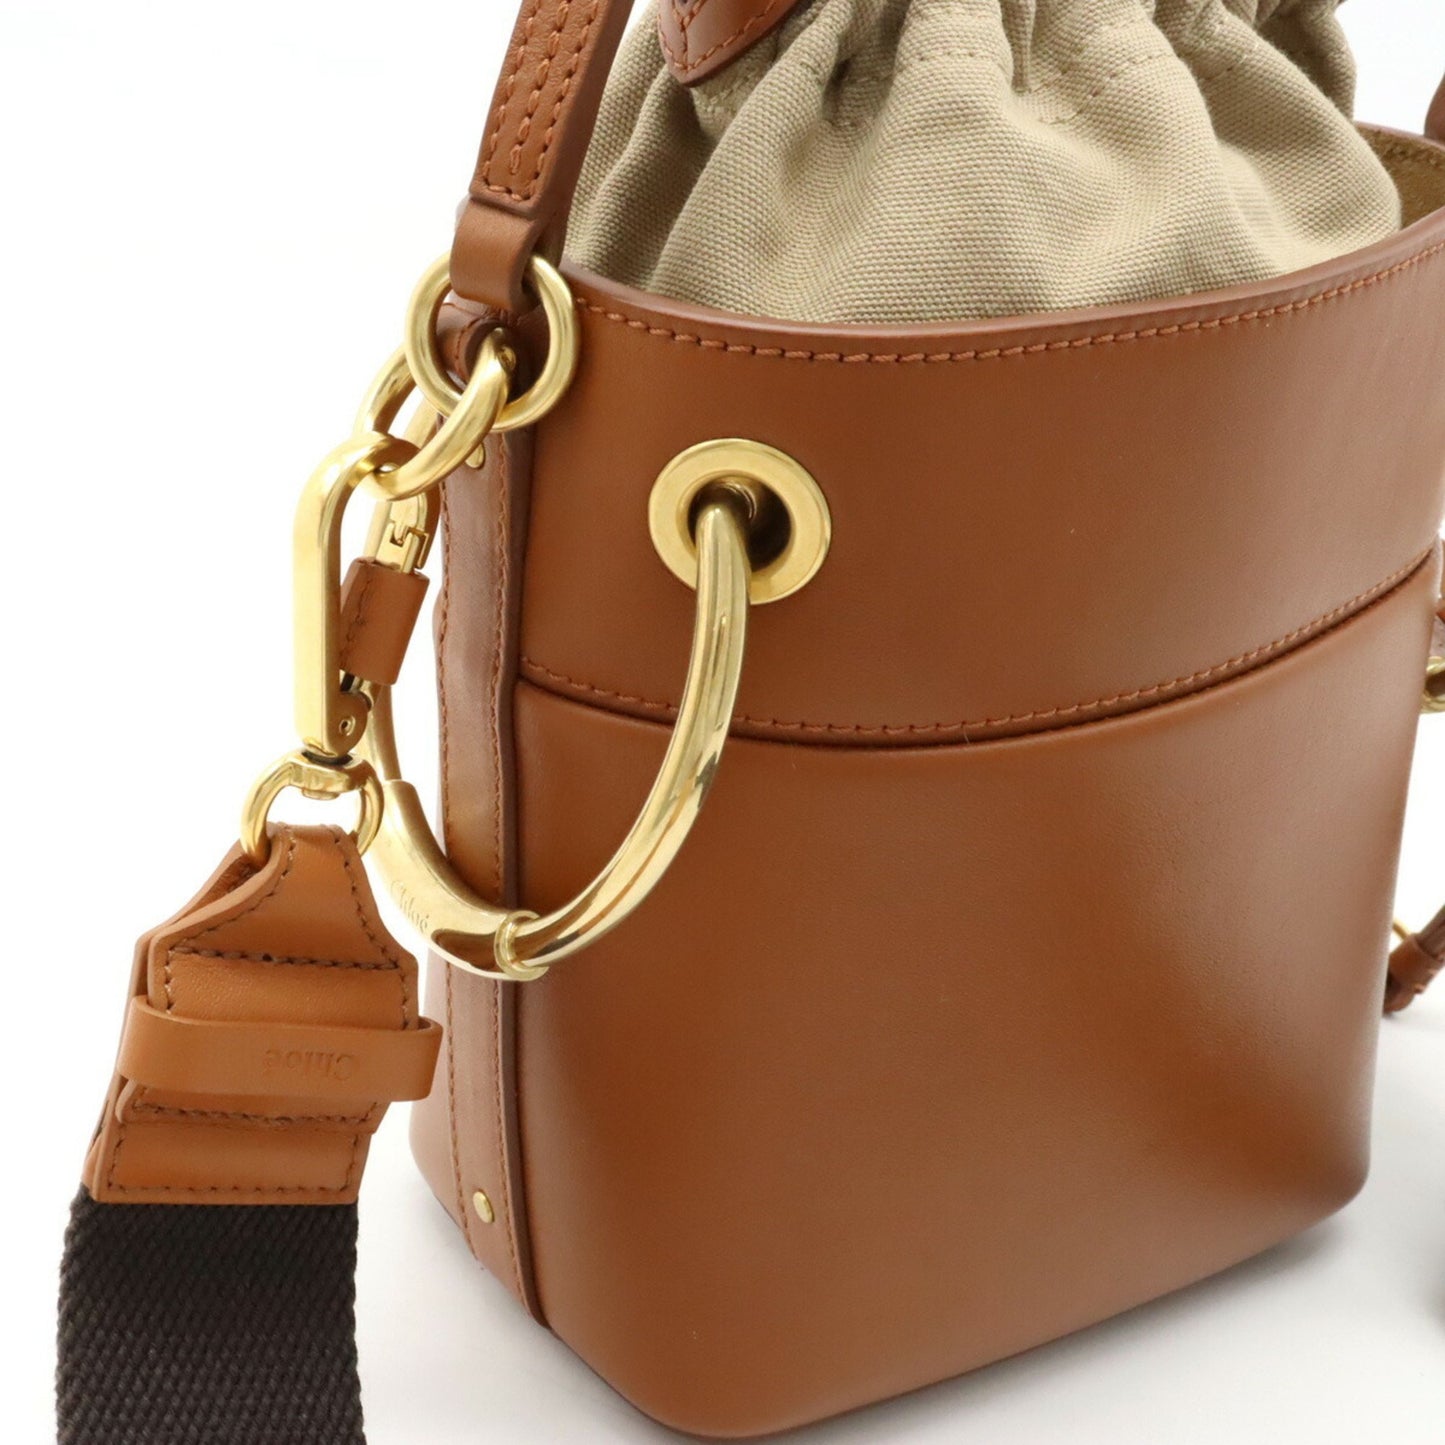 Chloe Women's Camel Leather Mini Handbag with Shoulder Strap in Camel